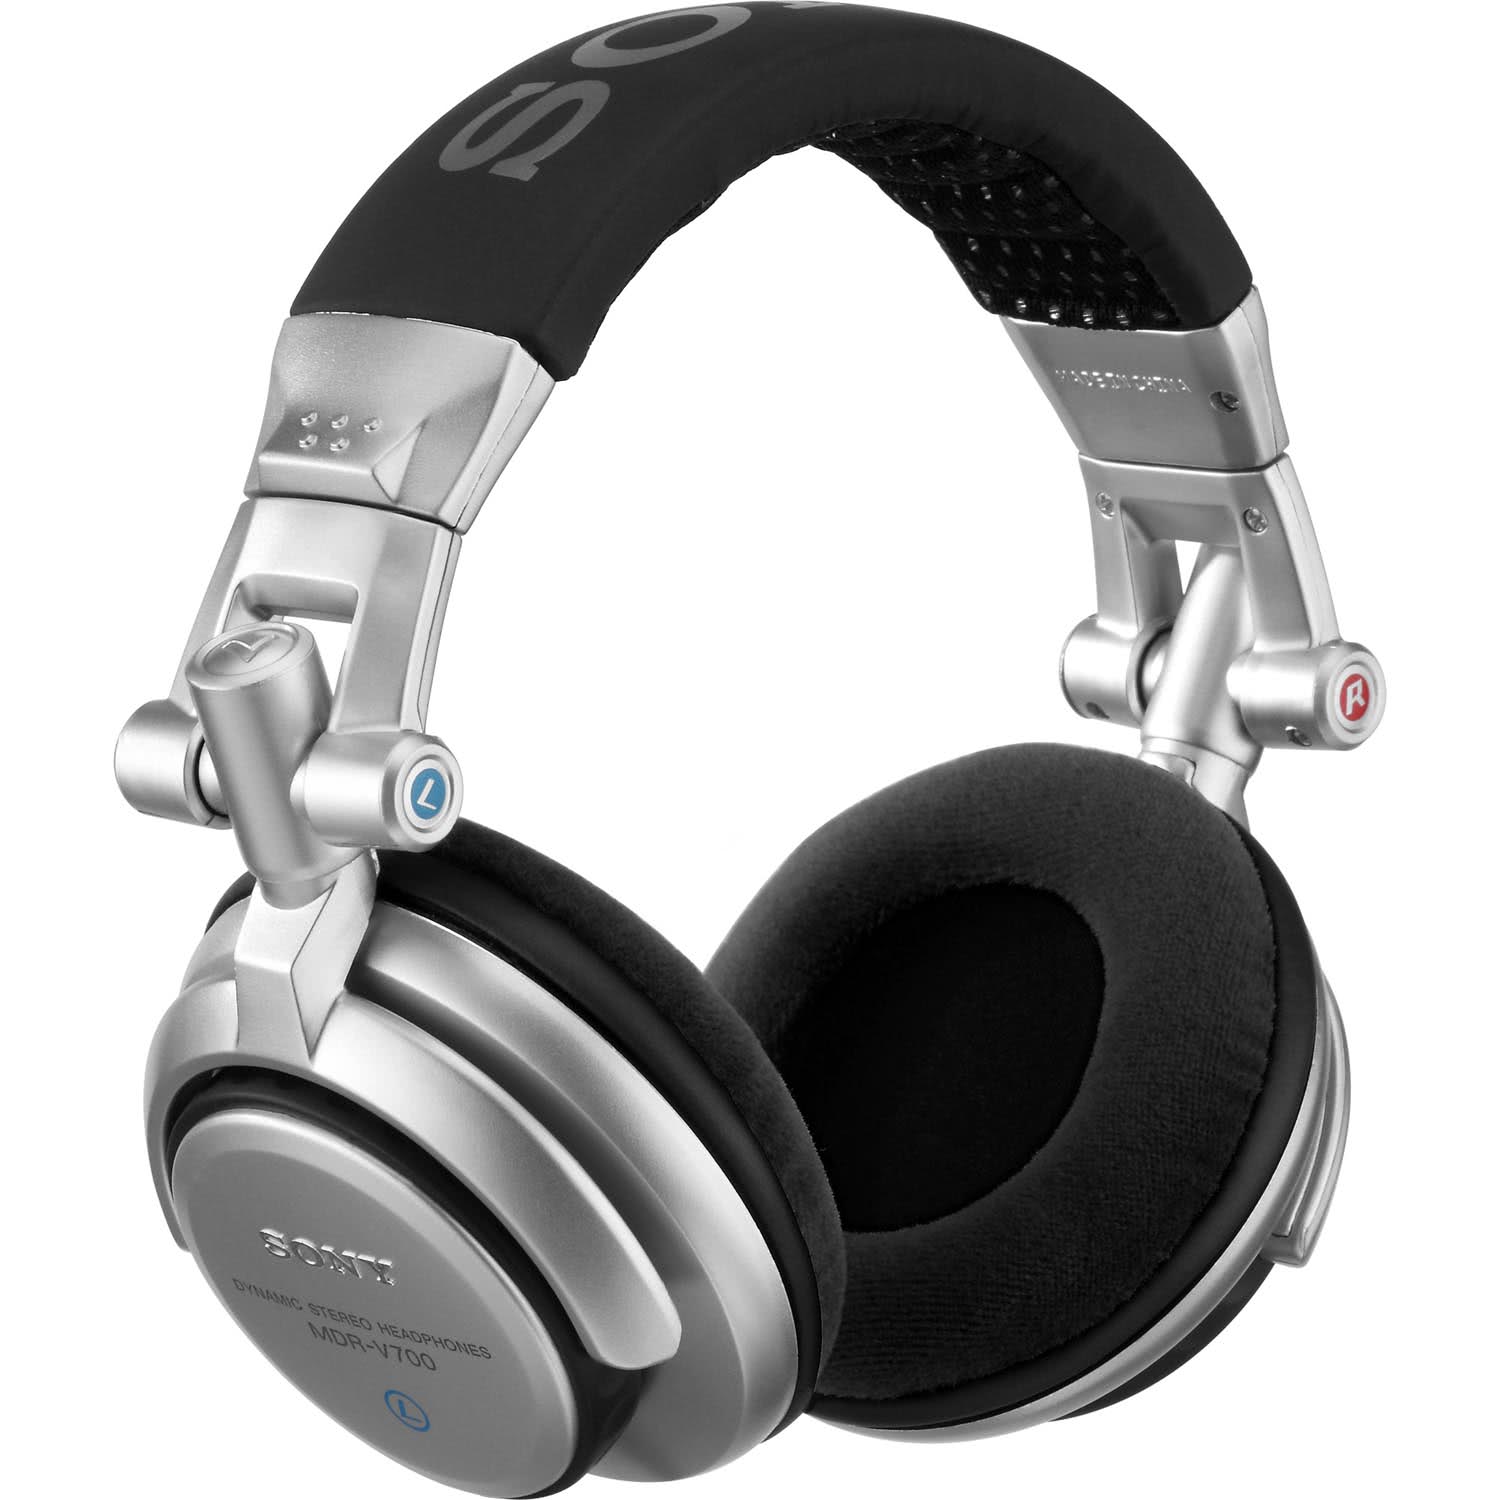 WEWOM 2 Hochwertige Ersatz Ohrpolster für Sony MDR-V700 DJ Kopfhörer 